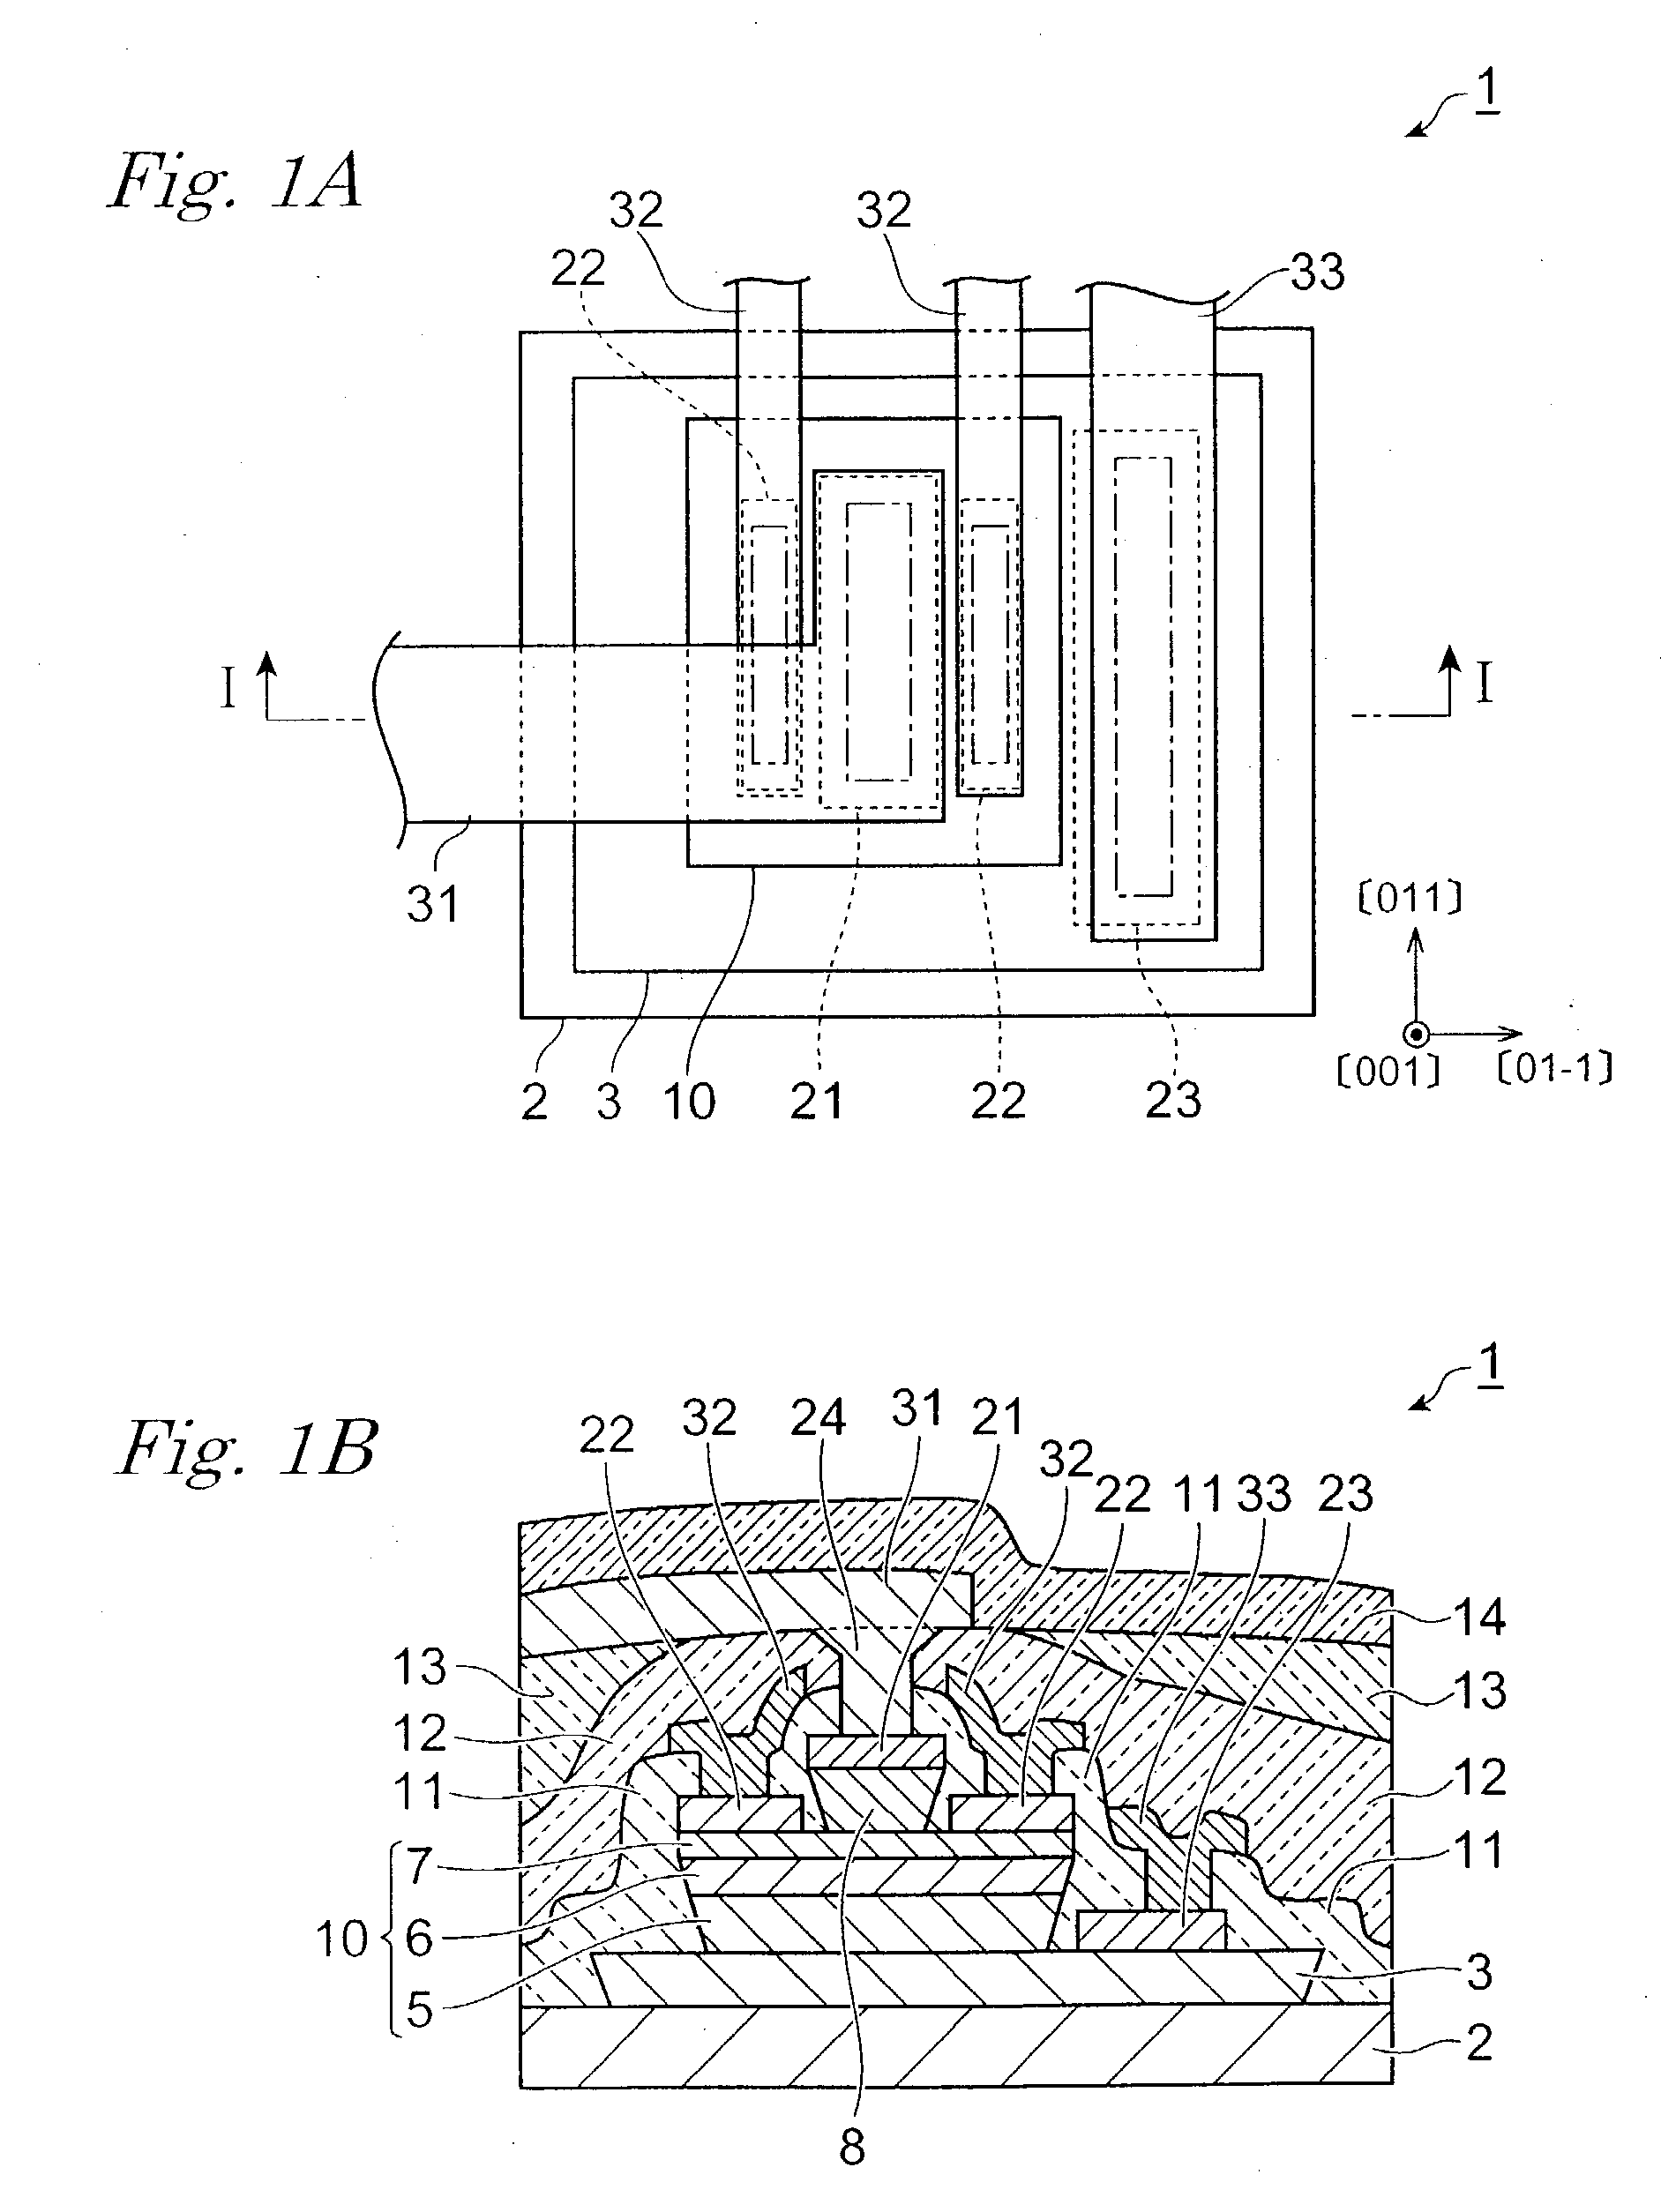 Method of manufacturing a hetero-junction bipolar transistor